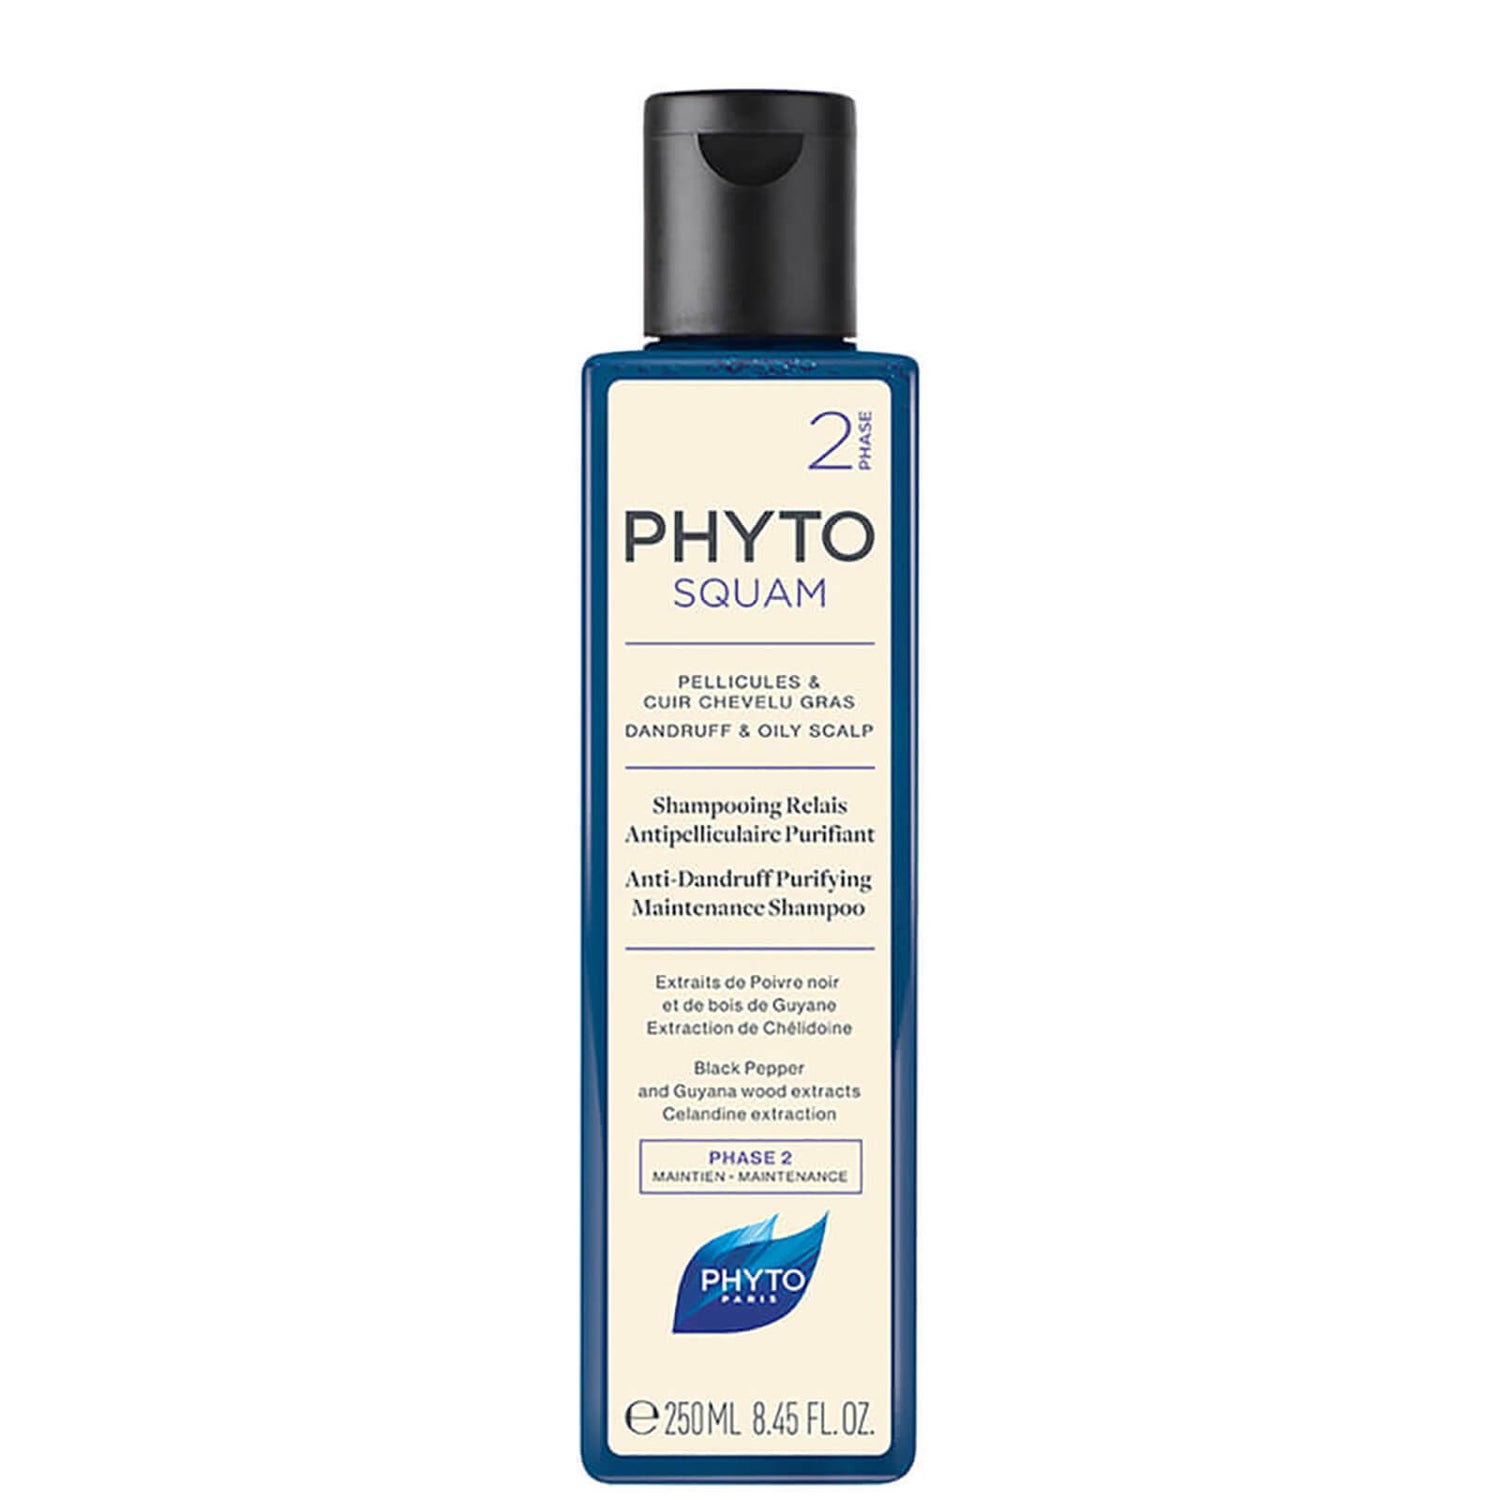 Phyto Squam Purifying Maintenance Shampoo 4.22 fl. oz